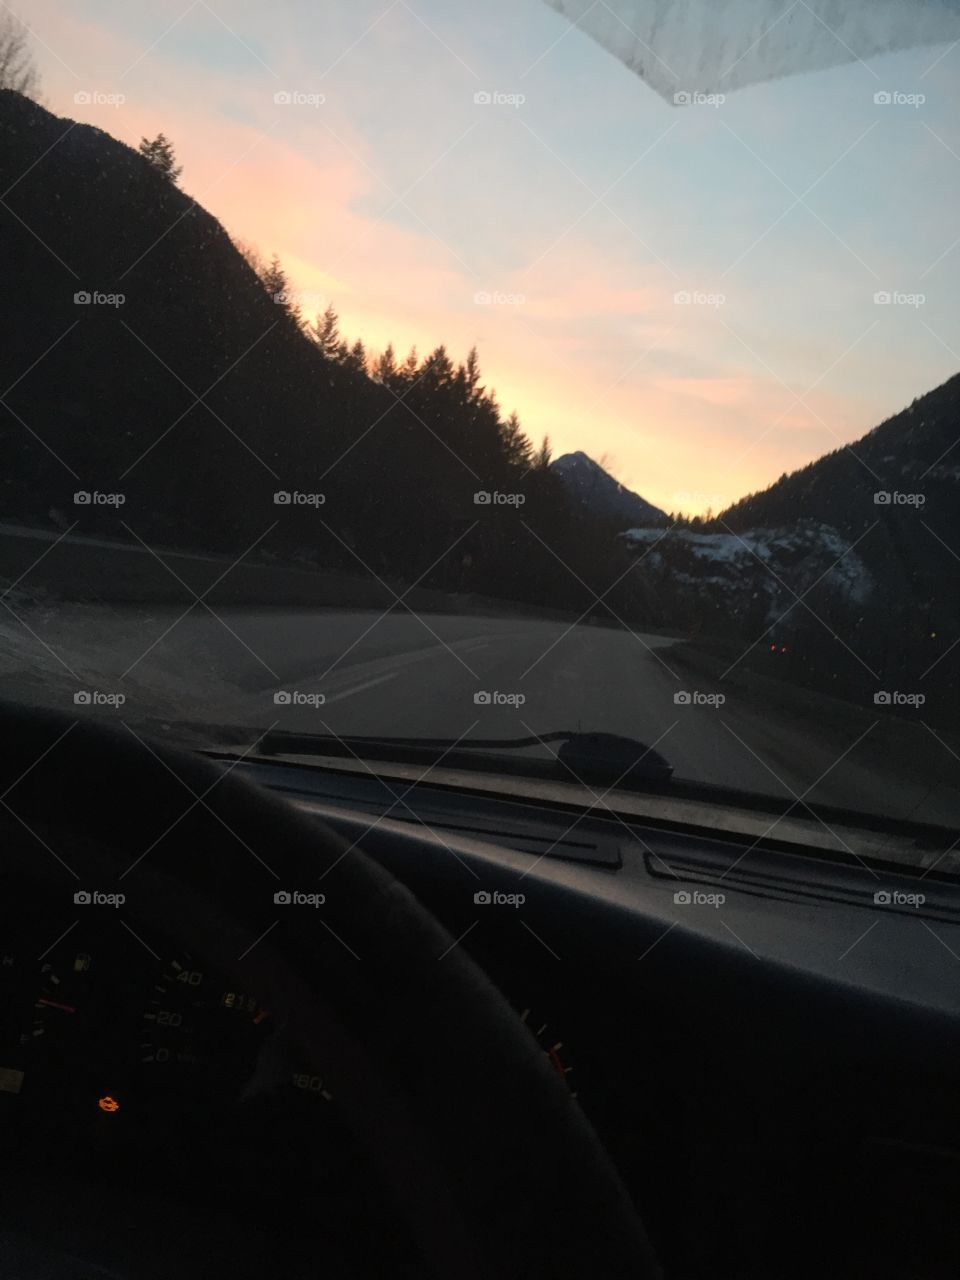 Road trip sunrises 